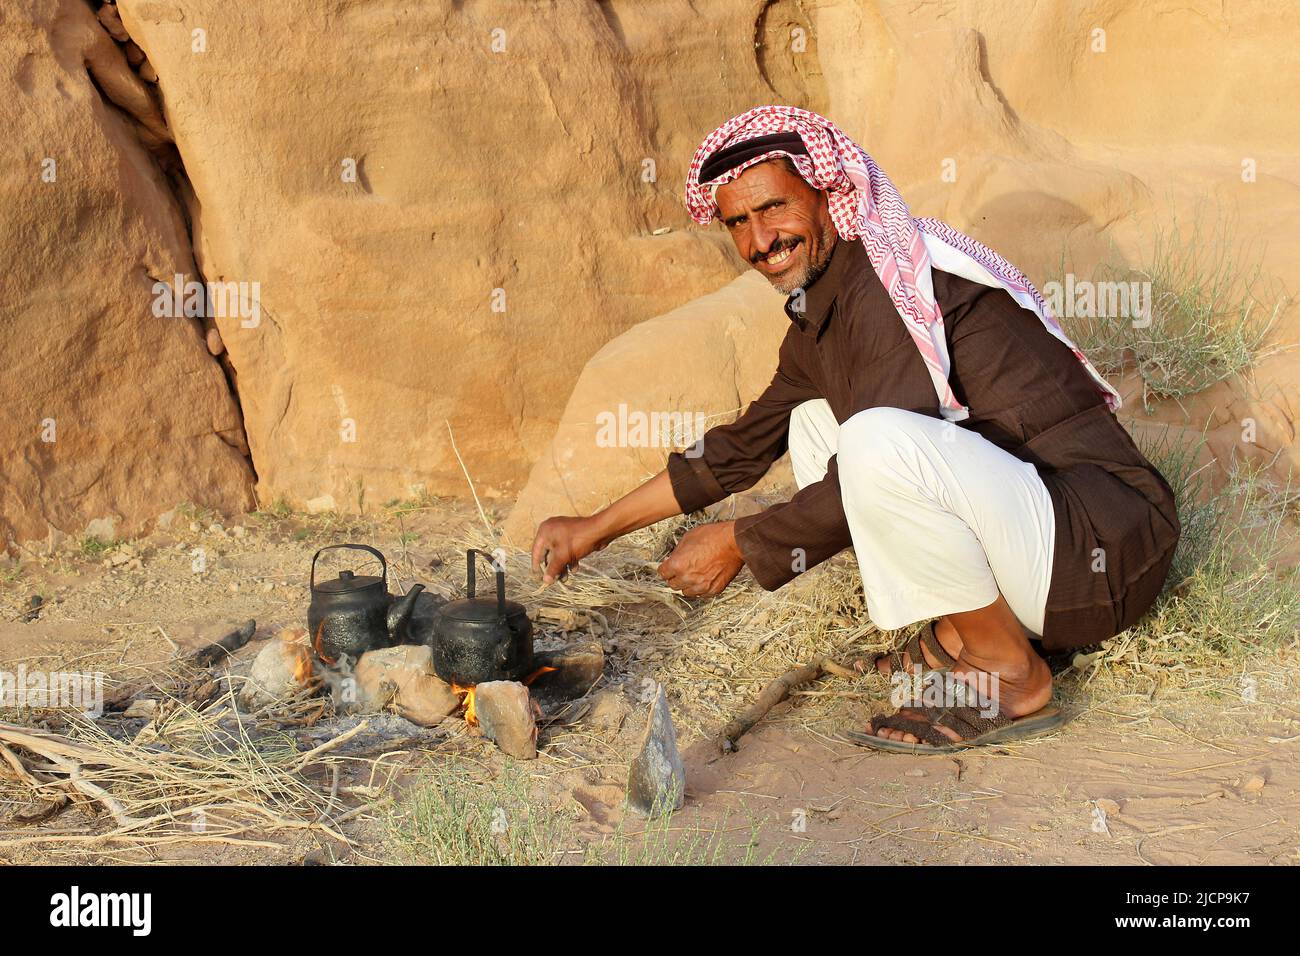 Bedouin man with kettle on open fire to make tea, Wadi Rum, Jordan Stock Photo